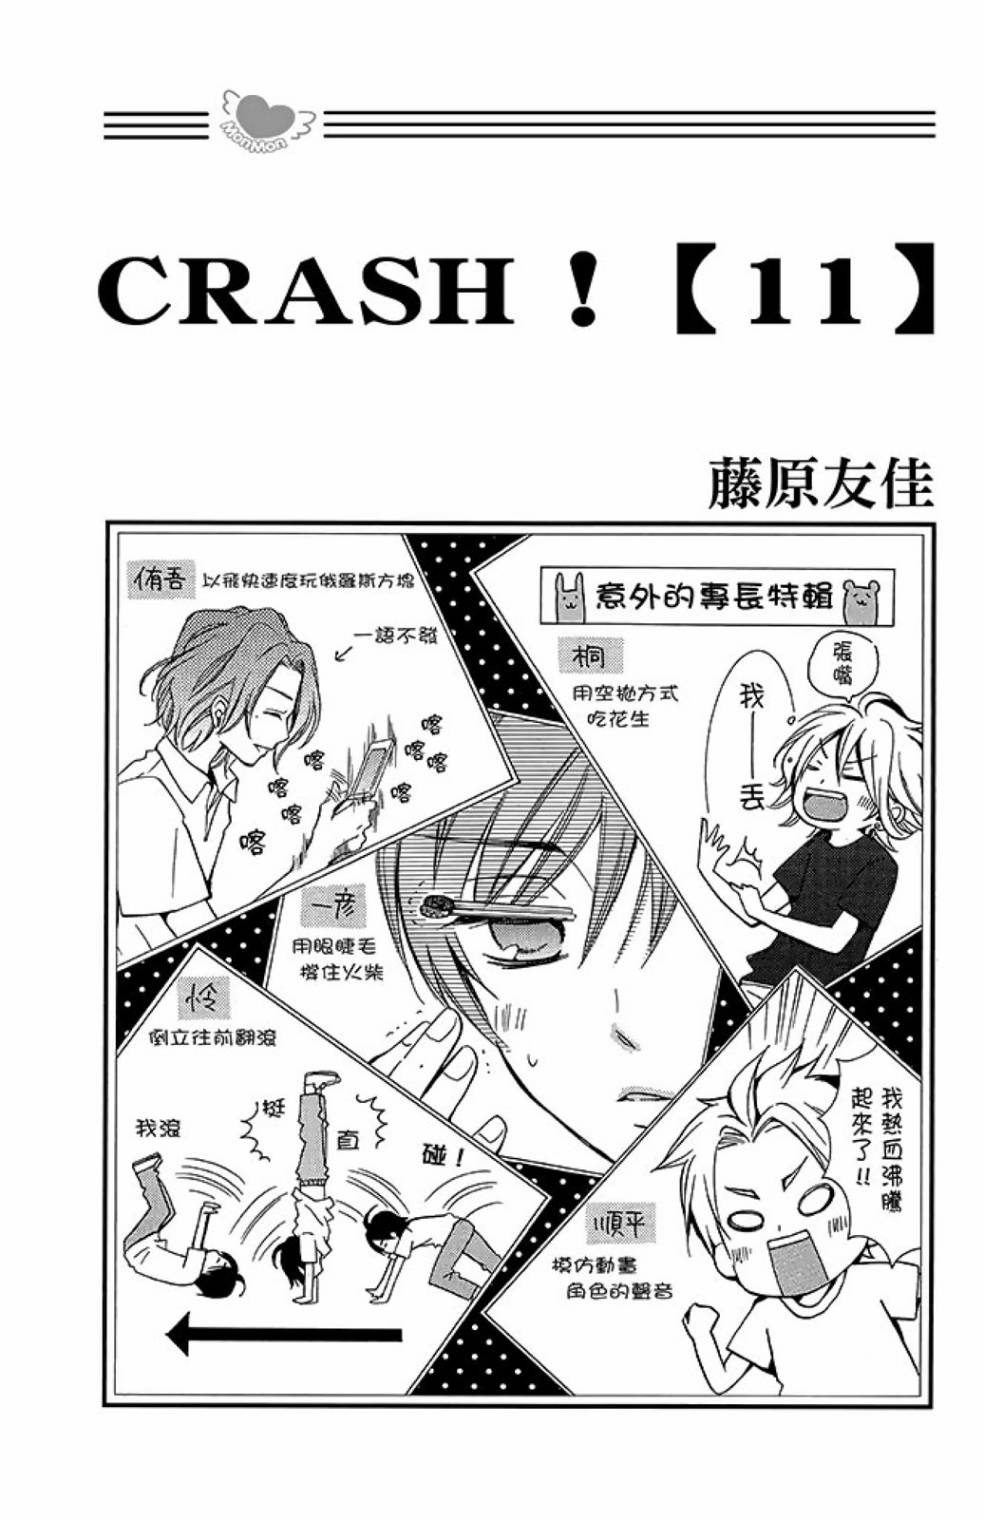 Crash!第二部 - 第11卷(1/4) - 3